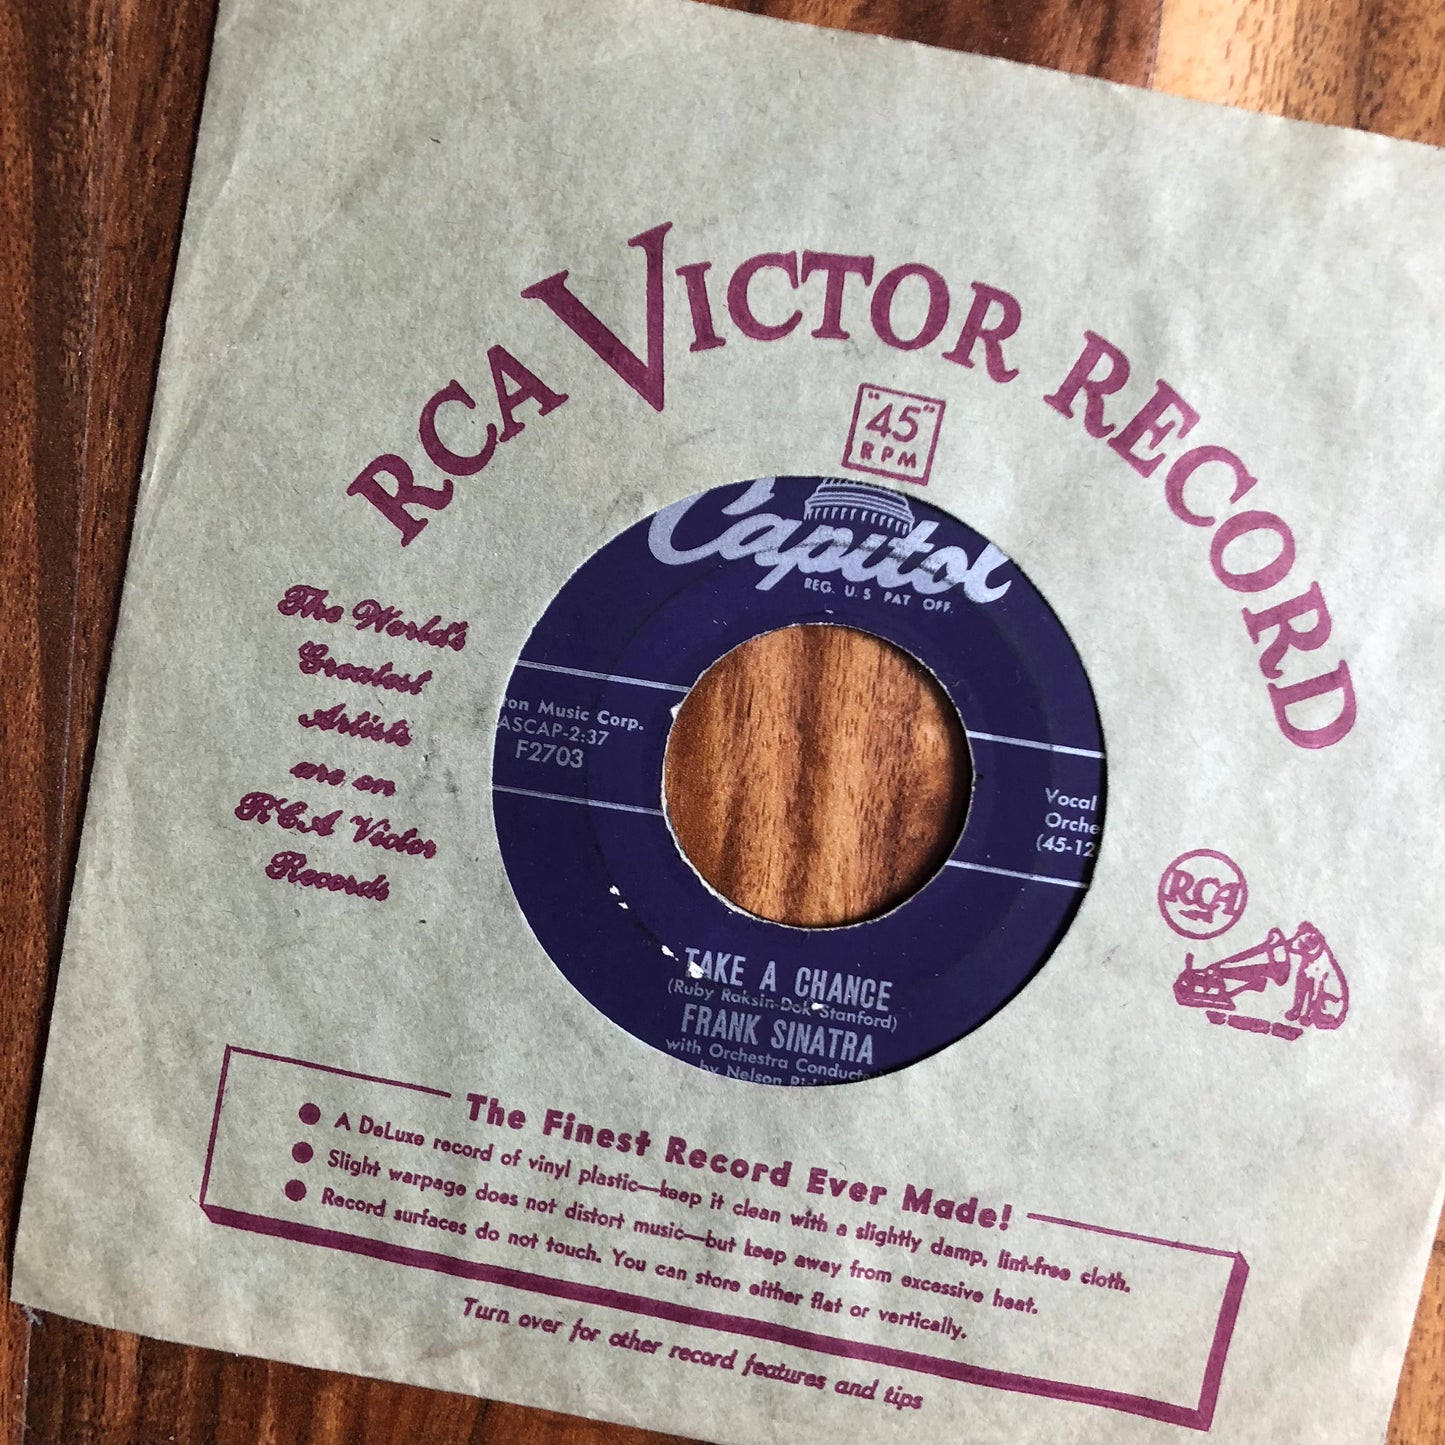 Lot of 4 Vintage Records RCA Capital DECCA Columbia Records